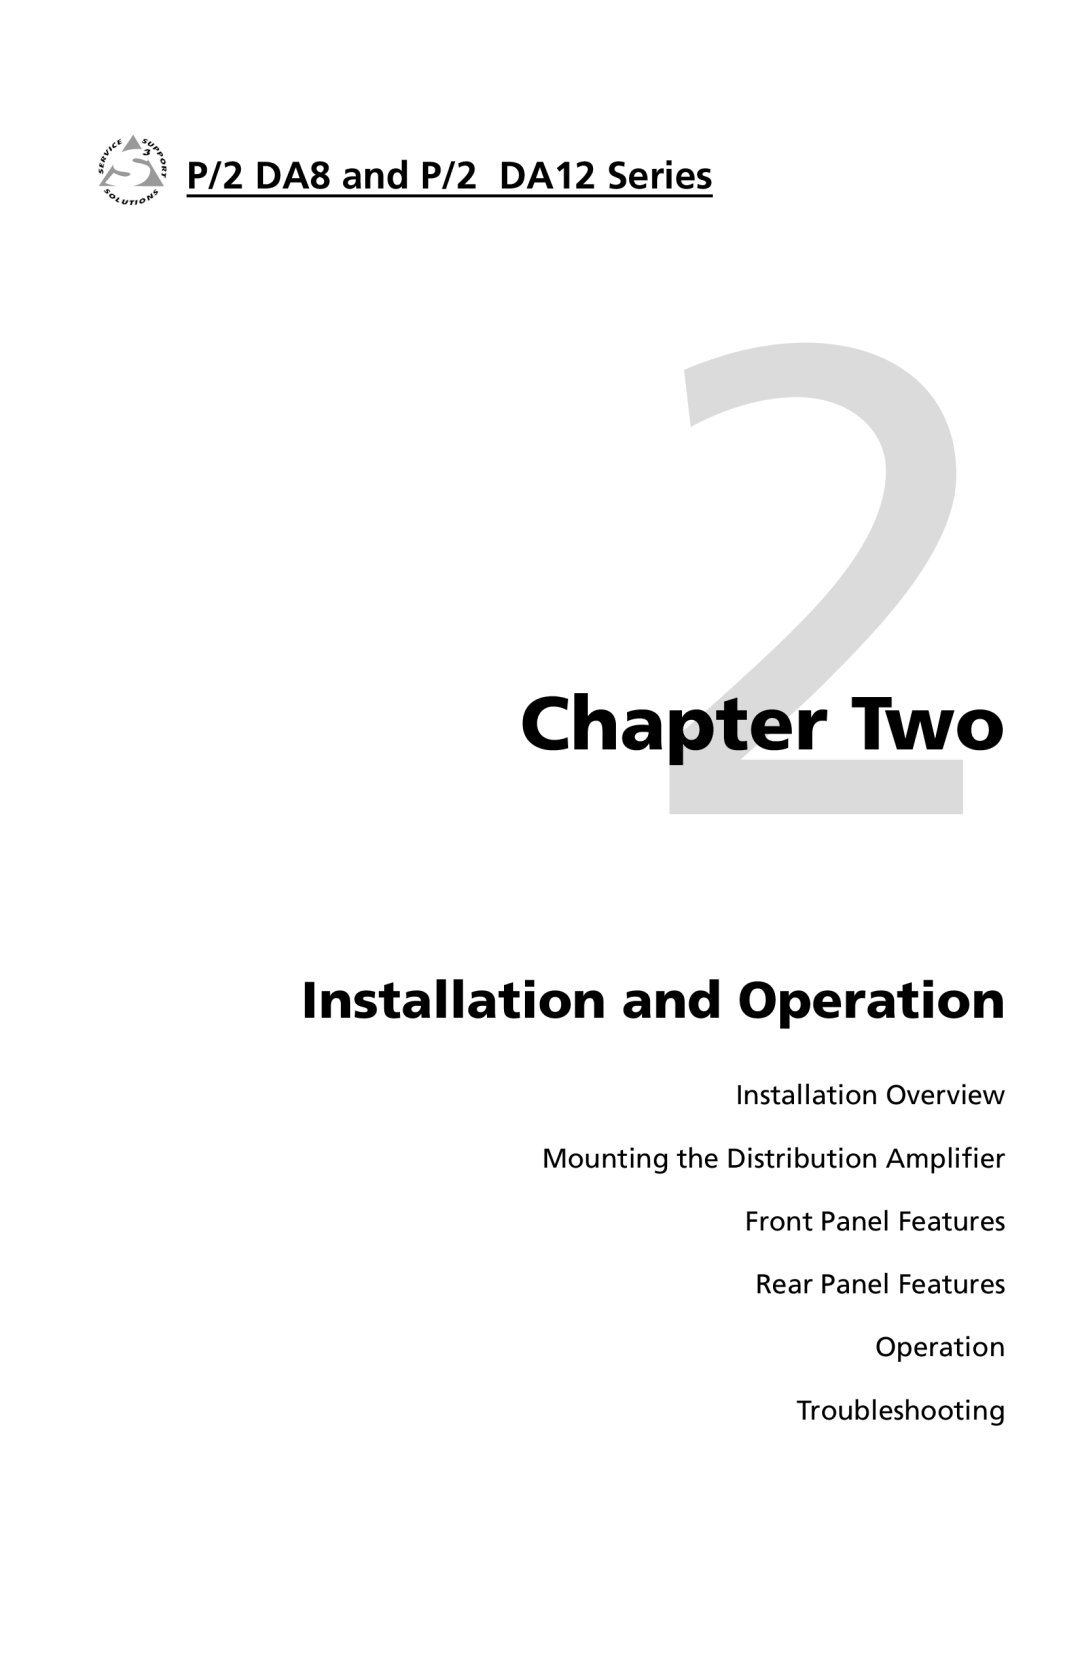 Extron electronic P/2 DA12 Series Two, Installation and Operation, Installation Overview, Operation Troubleshooting 